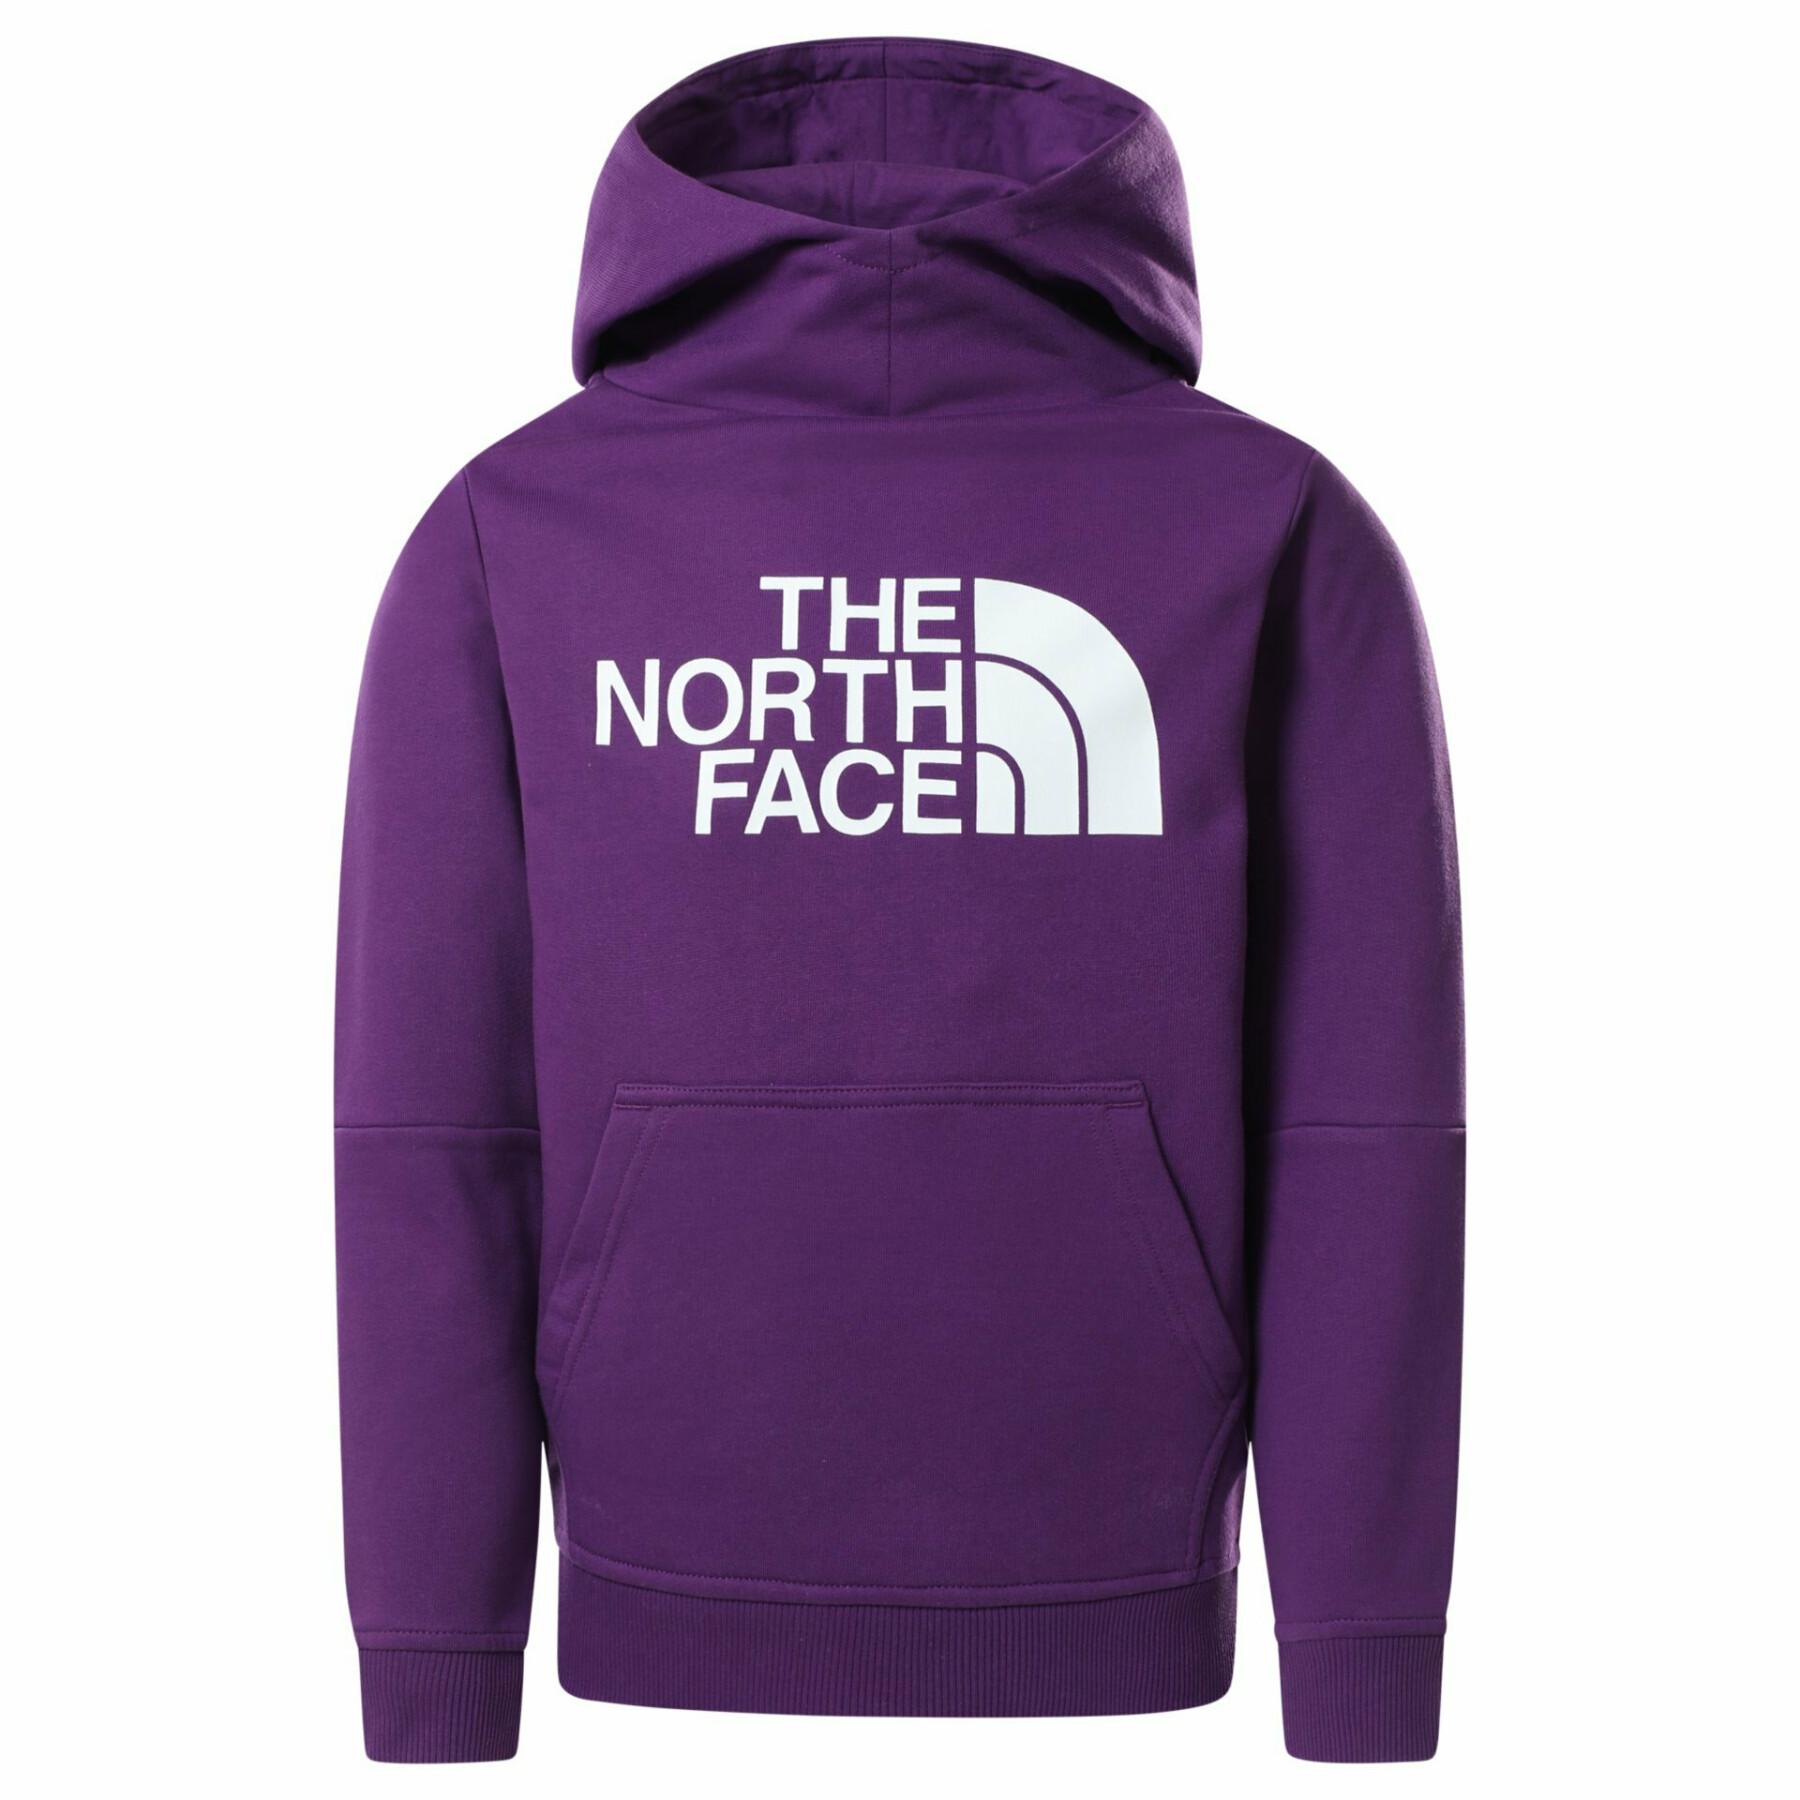 Sweatshirt för flickor The North Face Drew Peak P/o 2.0